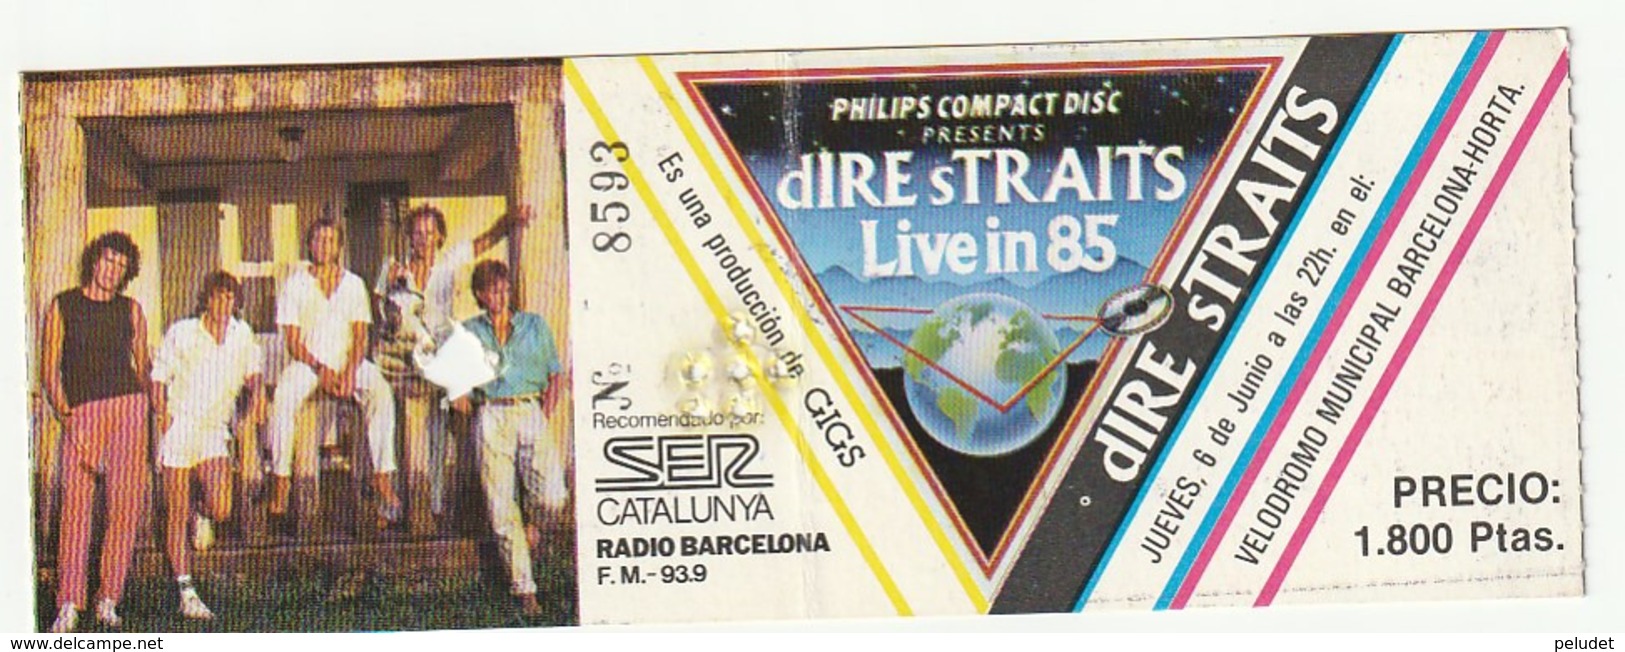 TICKET - ENTRADA / DIRE STRAITS LIVE IN 85 - BARCELONA - Tickets - Vouchers